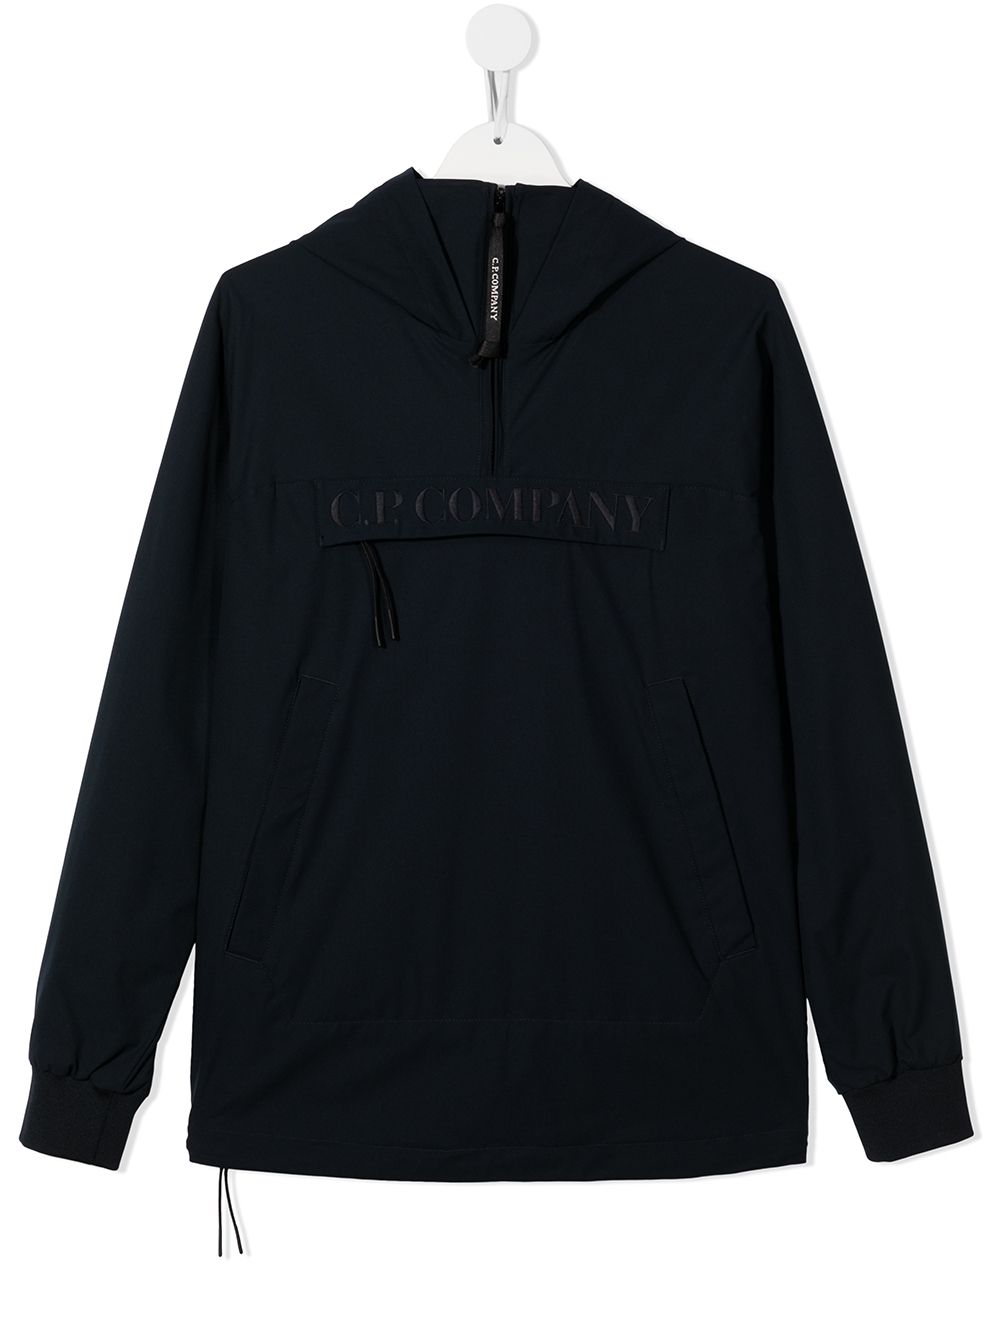 C.P. COMPANY KIDS Logo-embroidered rain jacket Navy - MAISONDEFASHION.COM